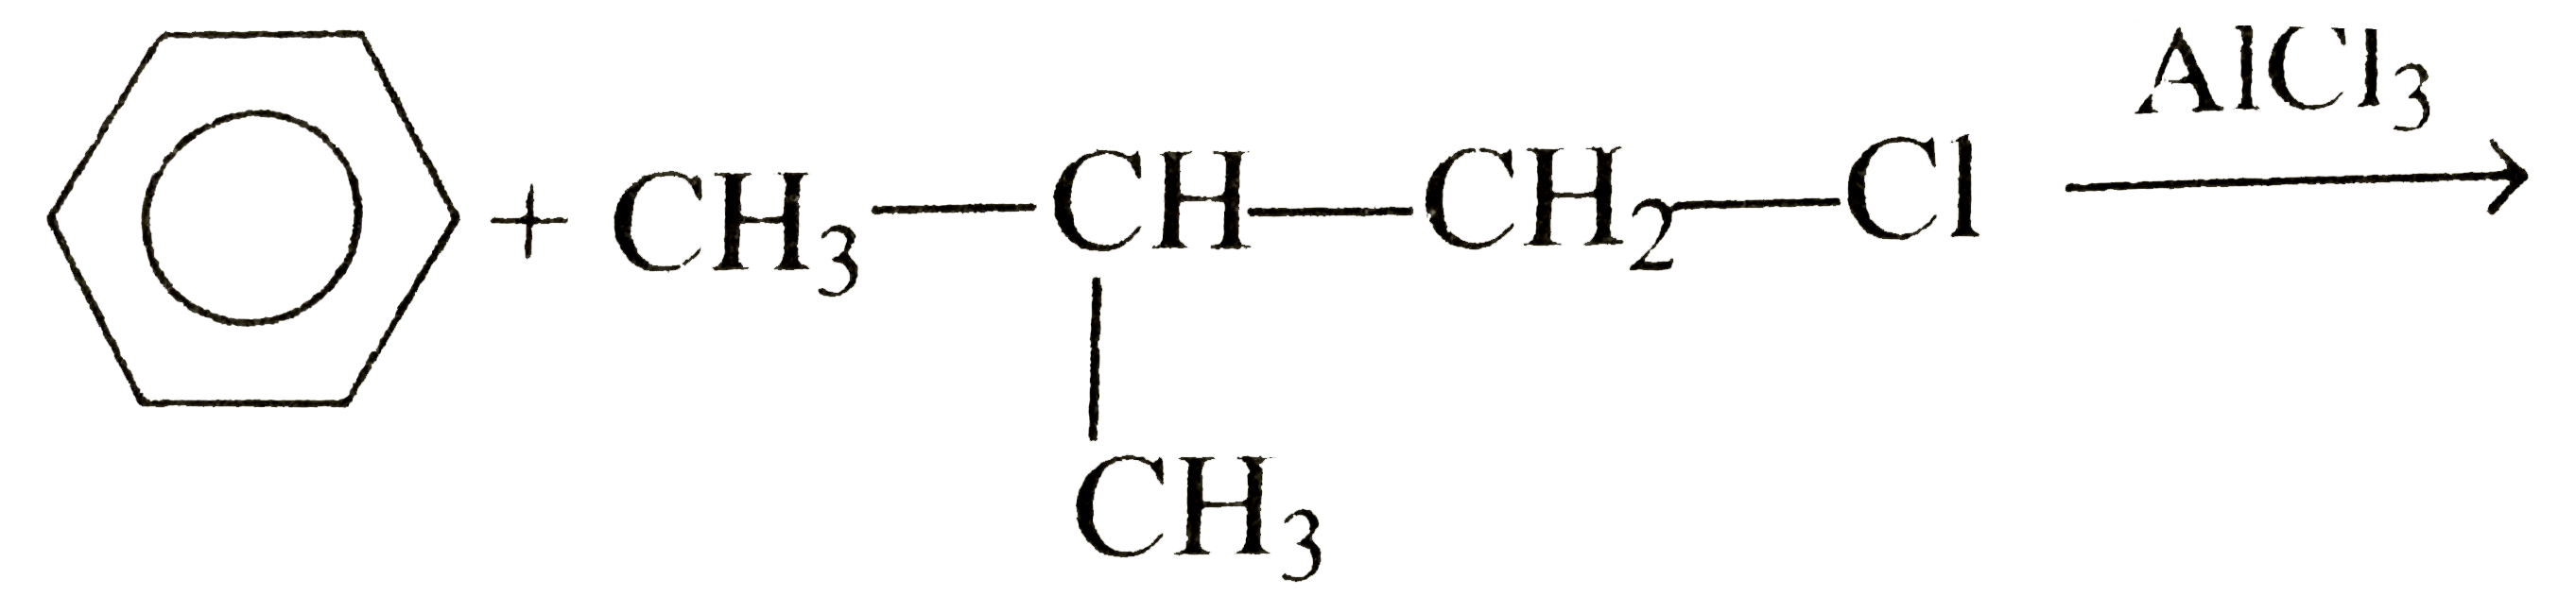 +CH(3)-underset(CH(3))underset(|)(CH)-CH(2) - Cloverset(AlCl(3))tocompound X ,is: